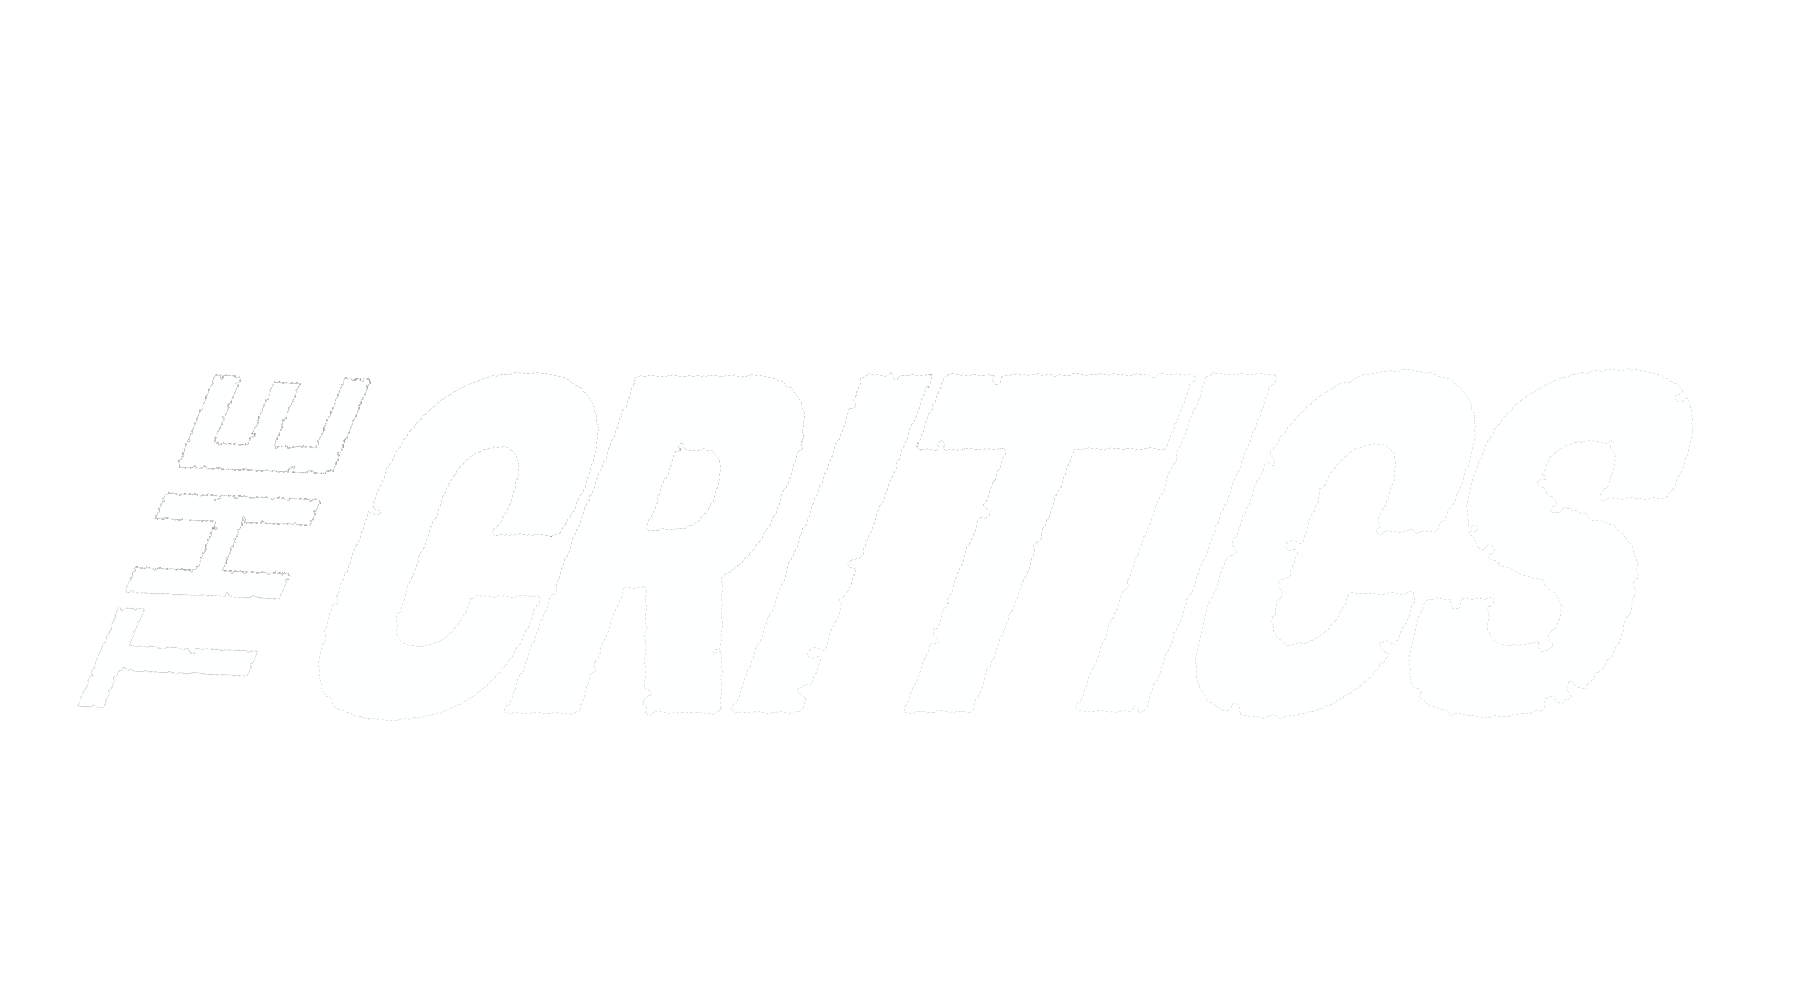 The Critics